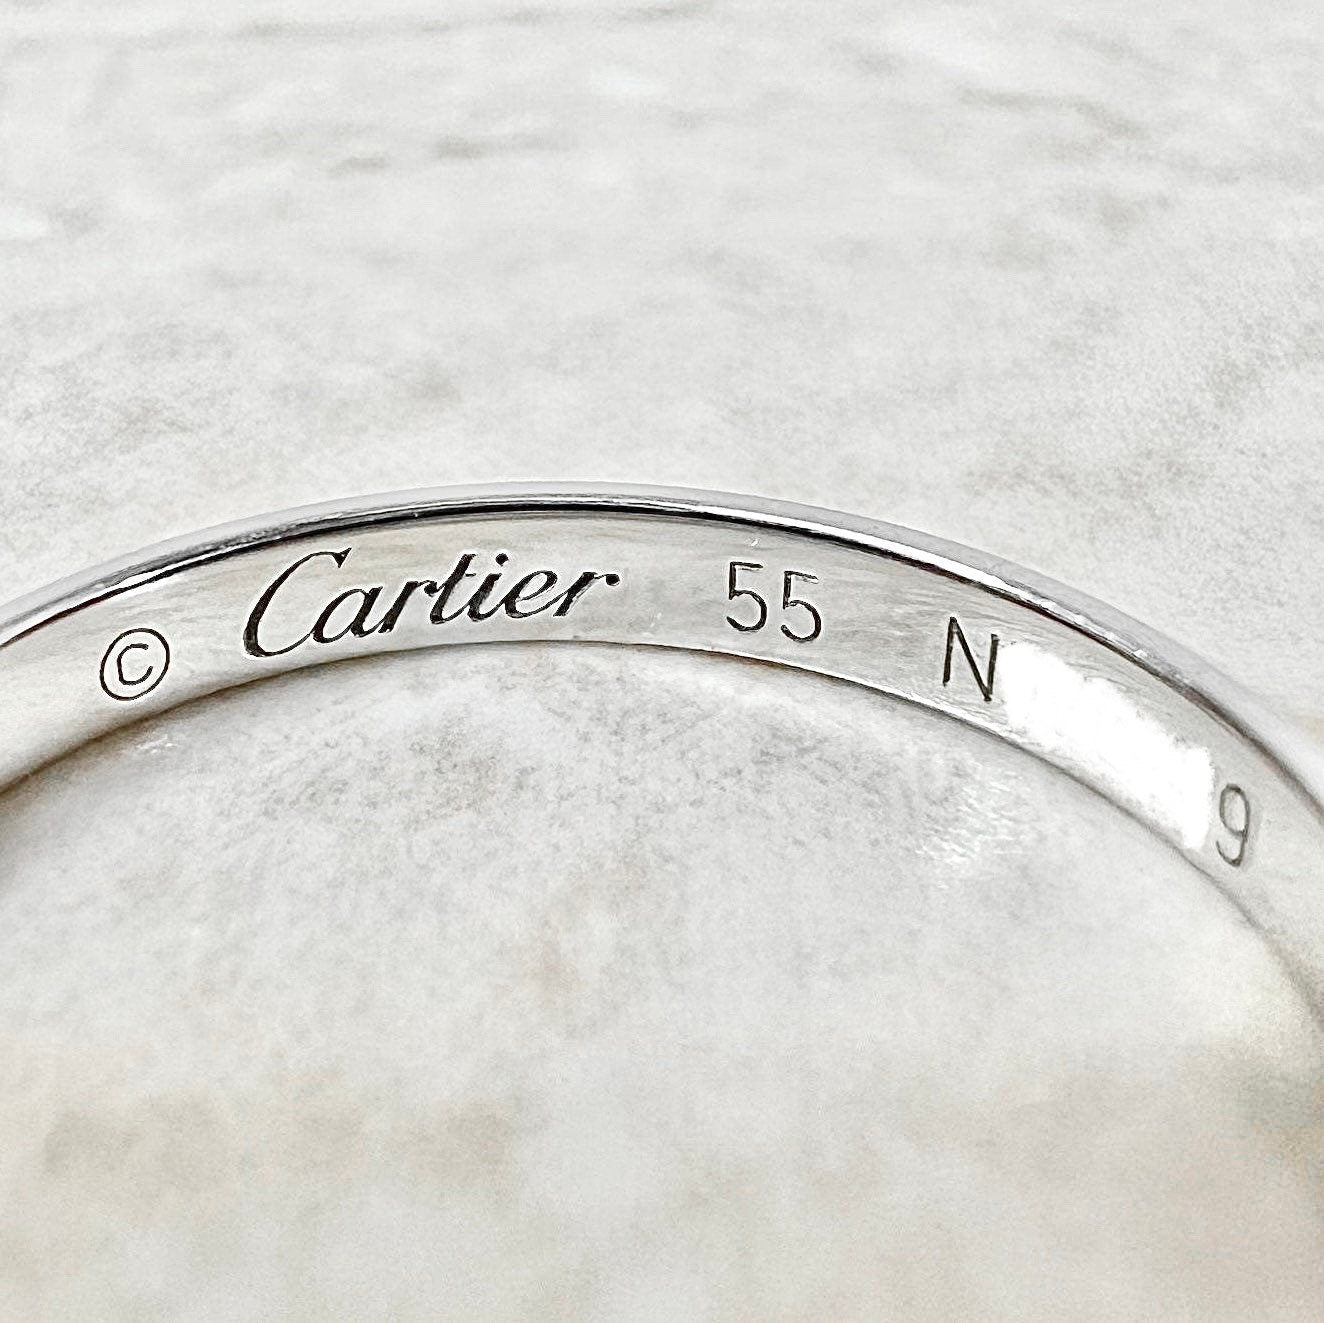 Platinum Cartier 1895 Wedding Band 2.5 mm - Platinum Cartier Band Ring - Cartier Wedding Ring - Anniversary Ring - Size 7.25 US / 55 FR